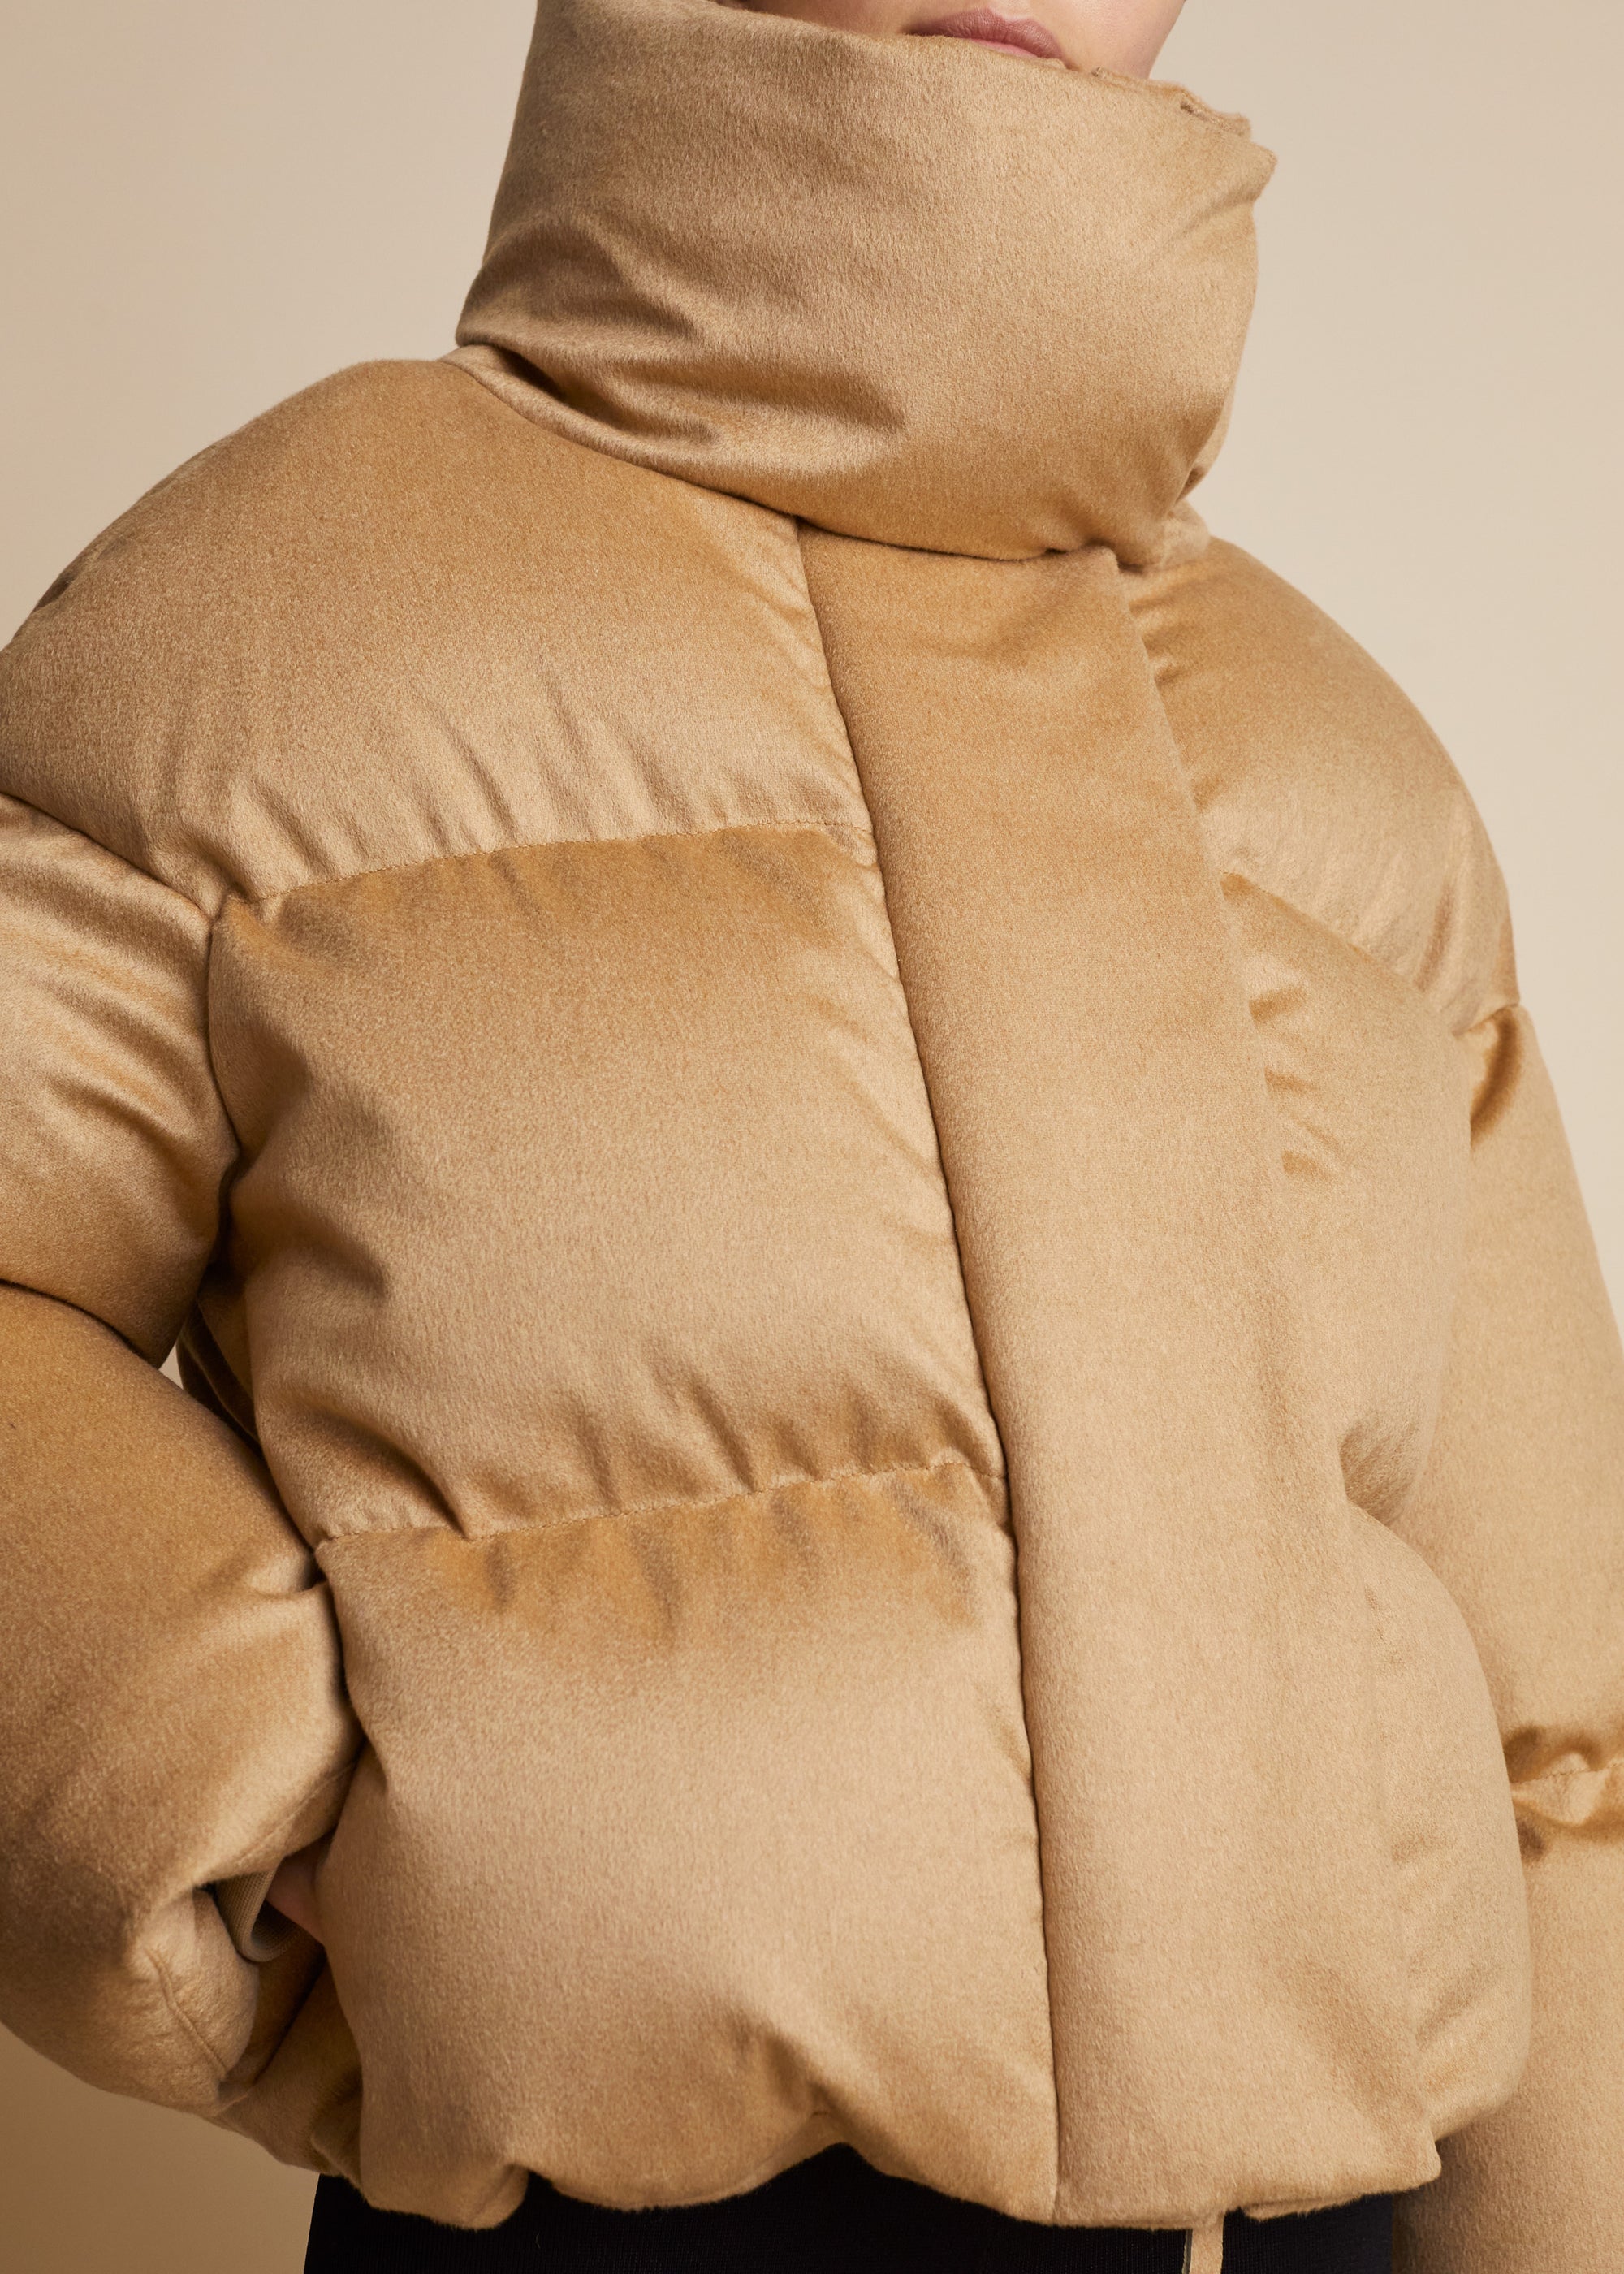 Raphael puffer jacket in cashmere - Caramel